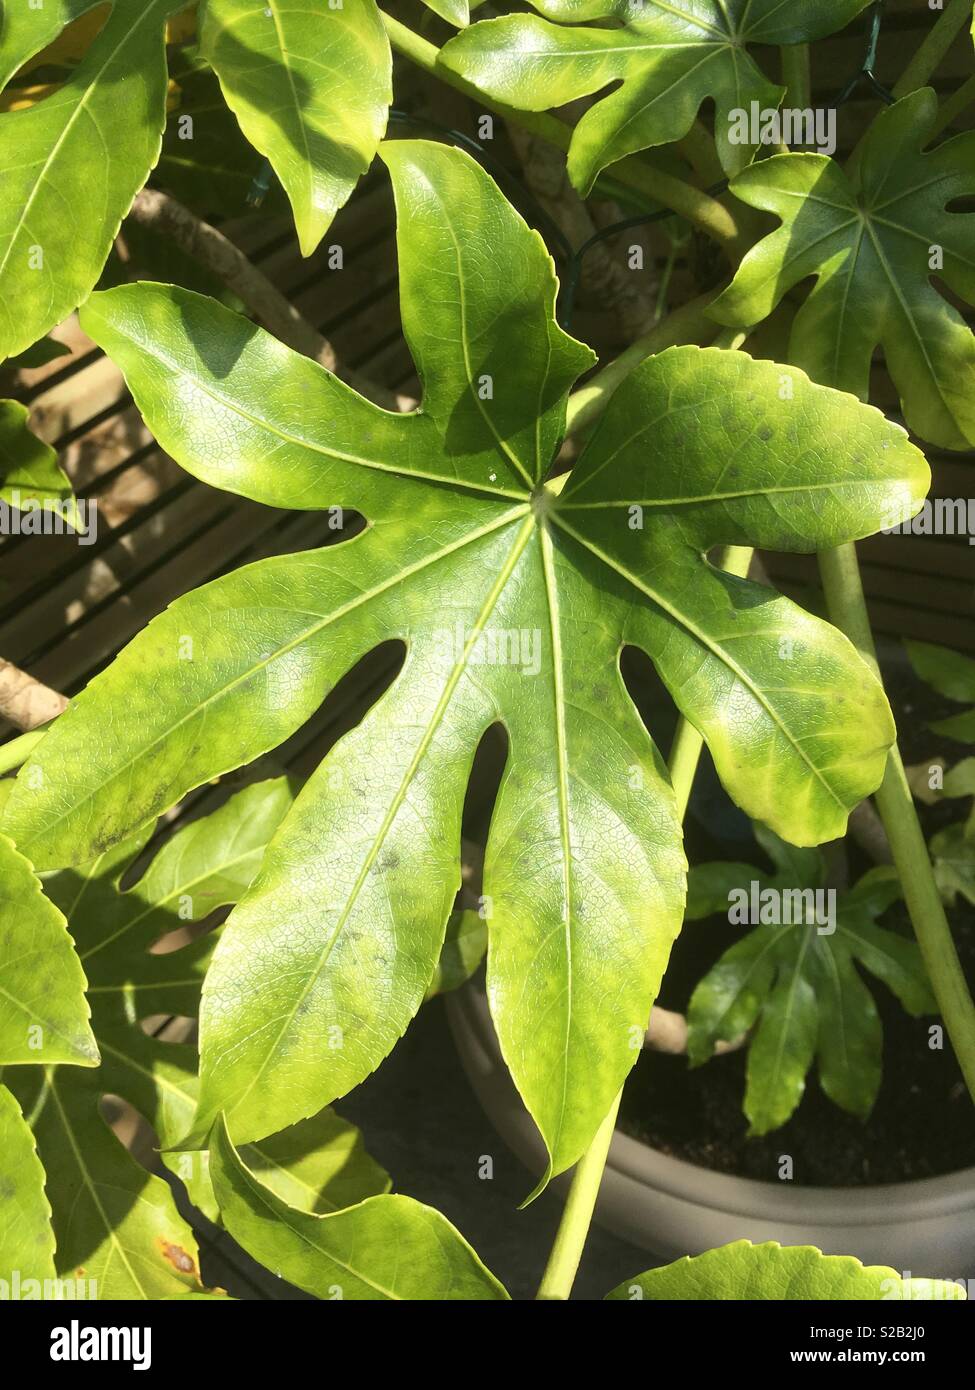 Fatsia japonica leaf Stock Photo